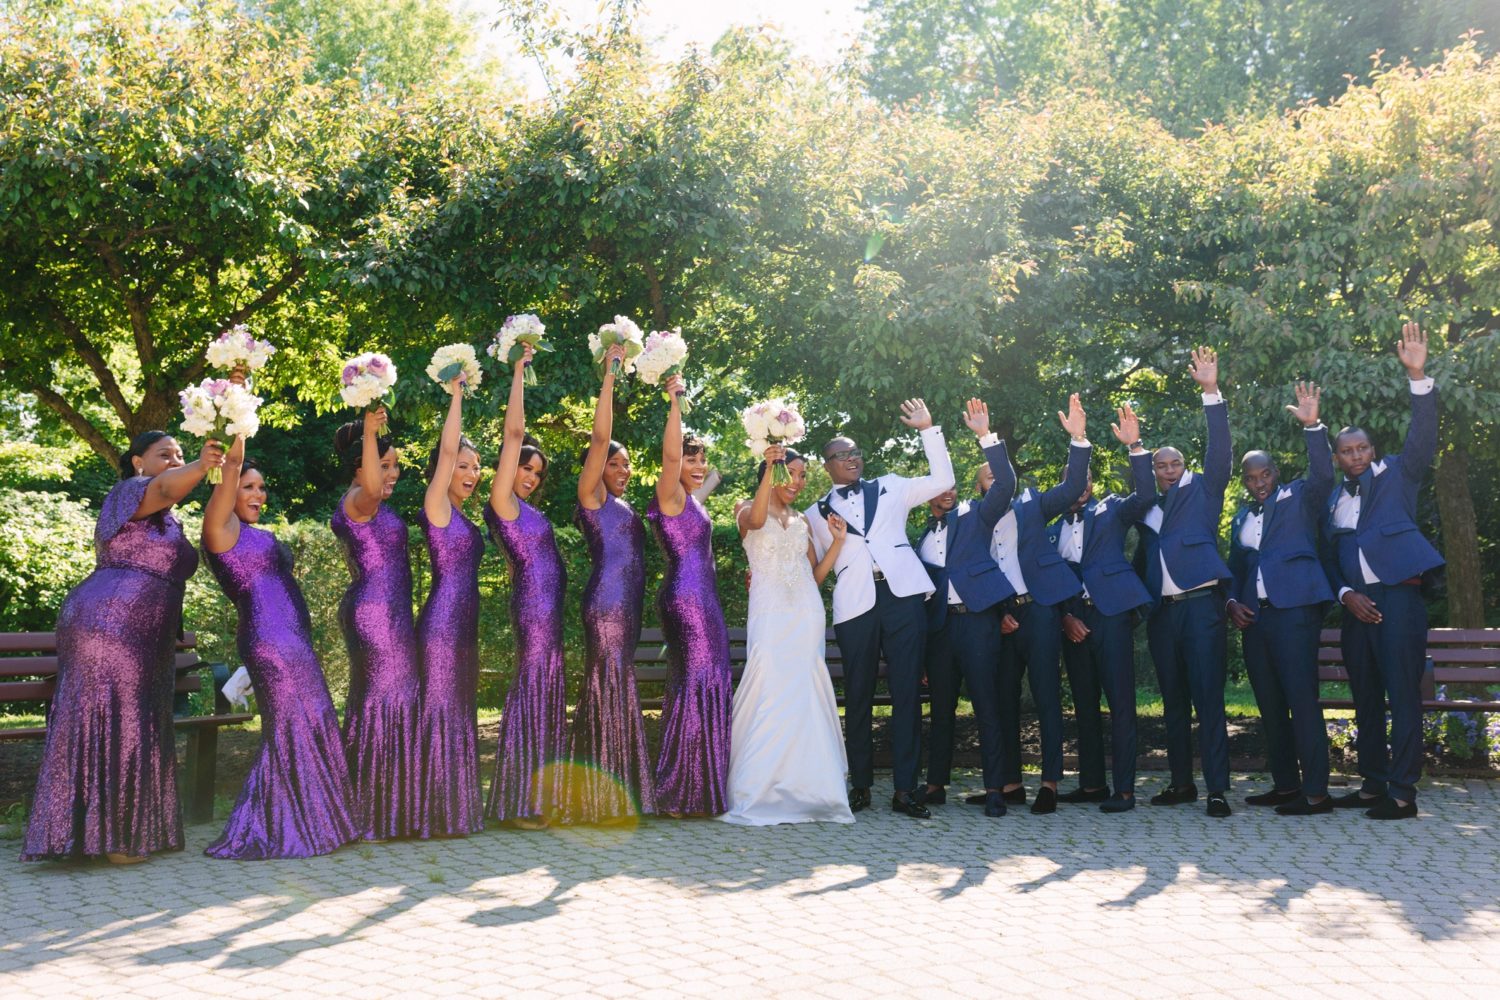 Large Bridal Party wedding photo inside the Piedmond Park in Atlanta, Georgia | Photo by Samantha Clarke